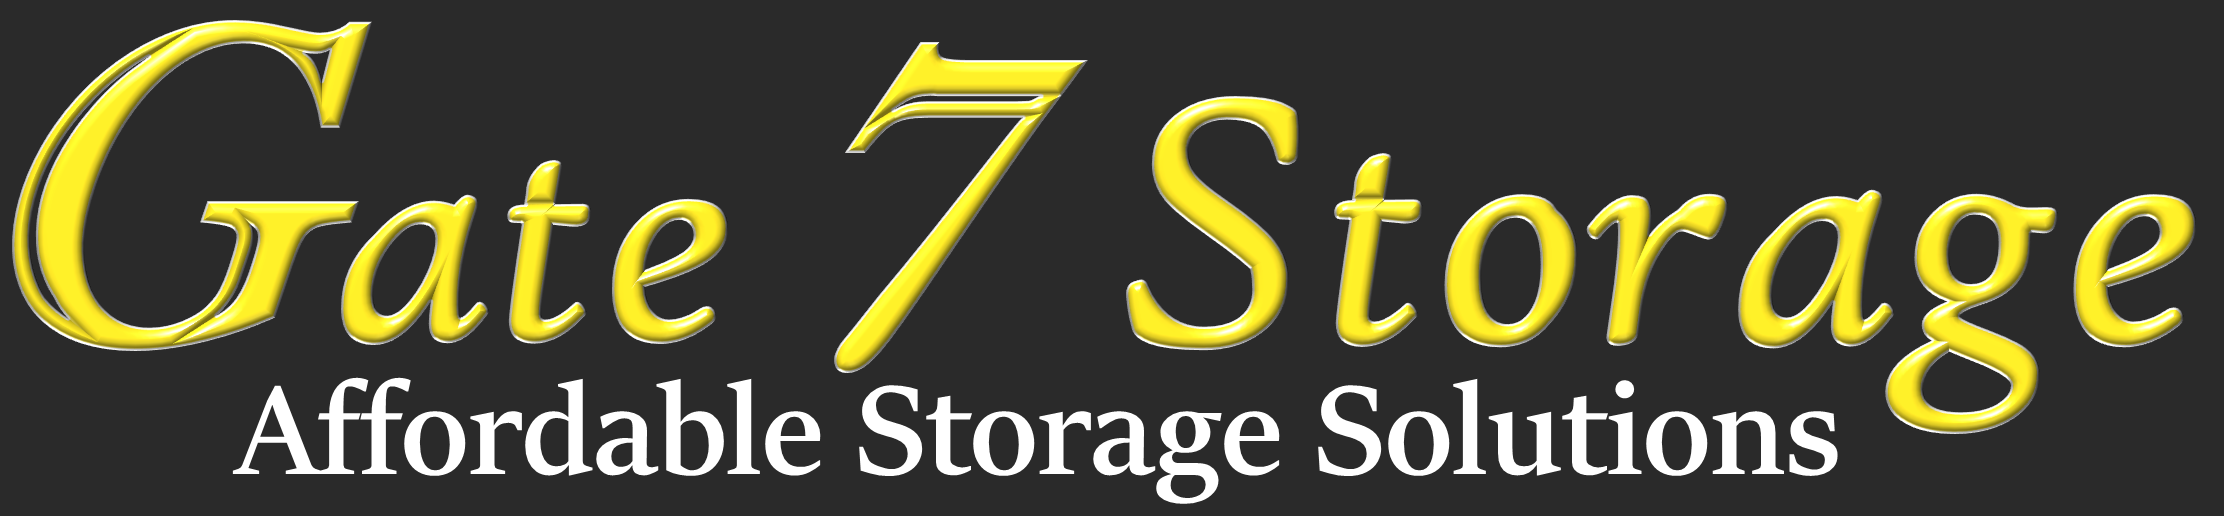 Gate 7 Storage | Ft Campbell & Oak Grove Self Storage